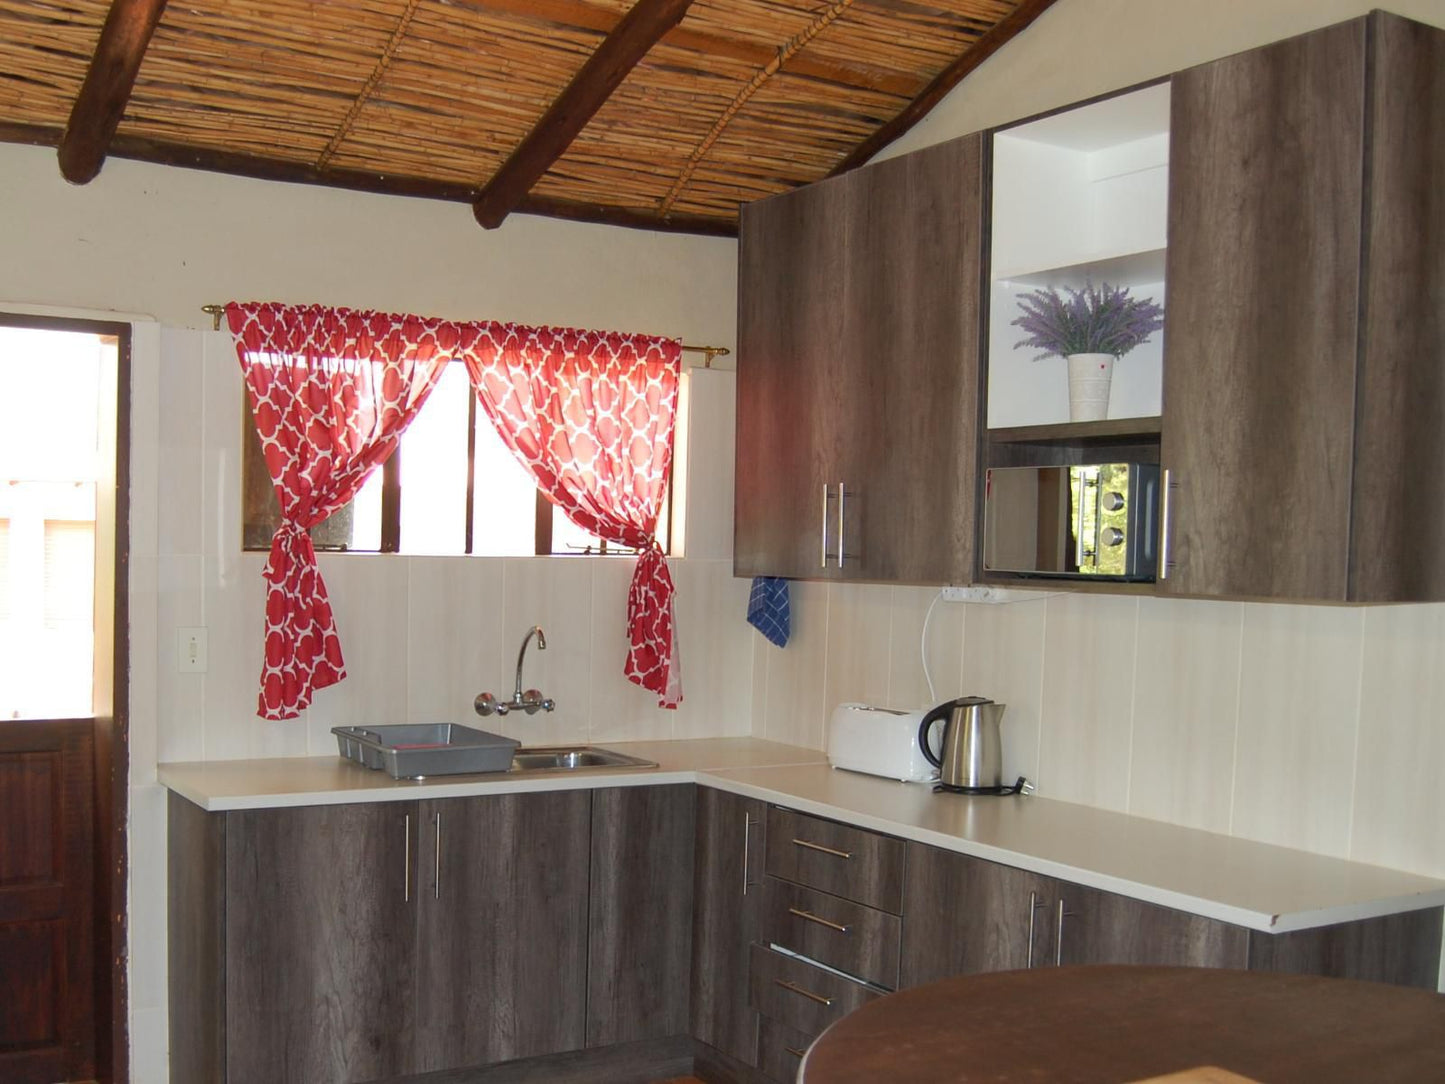 Gallery Inn Bela Bela Warmbaths Limpopo Province South Africa Kitchen